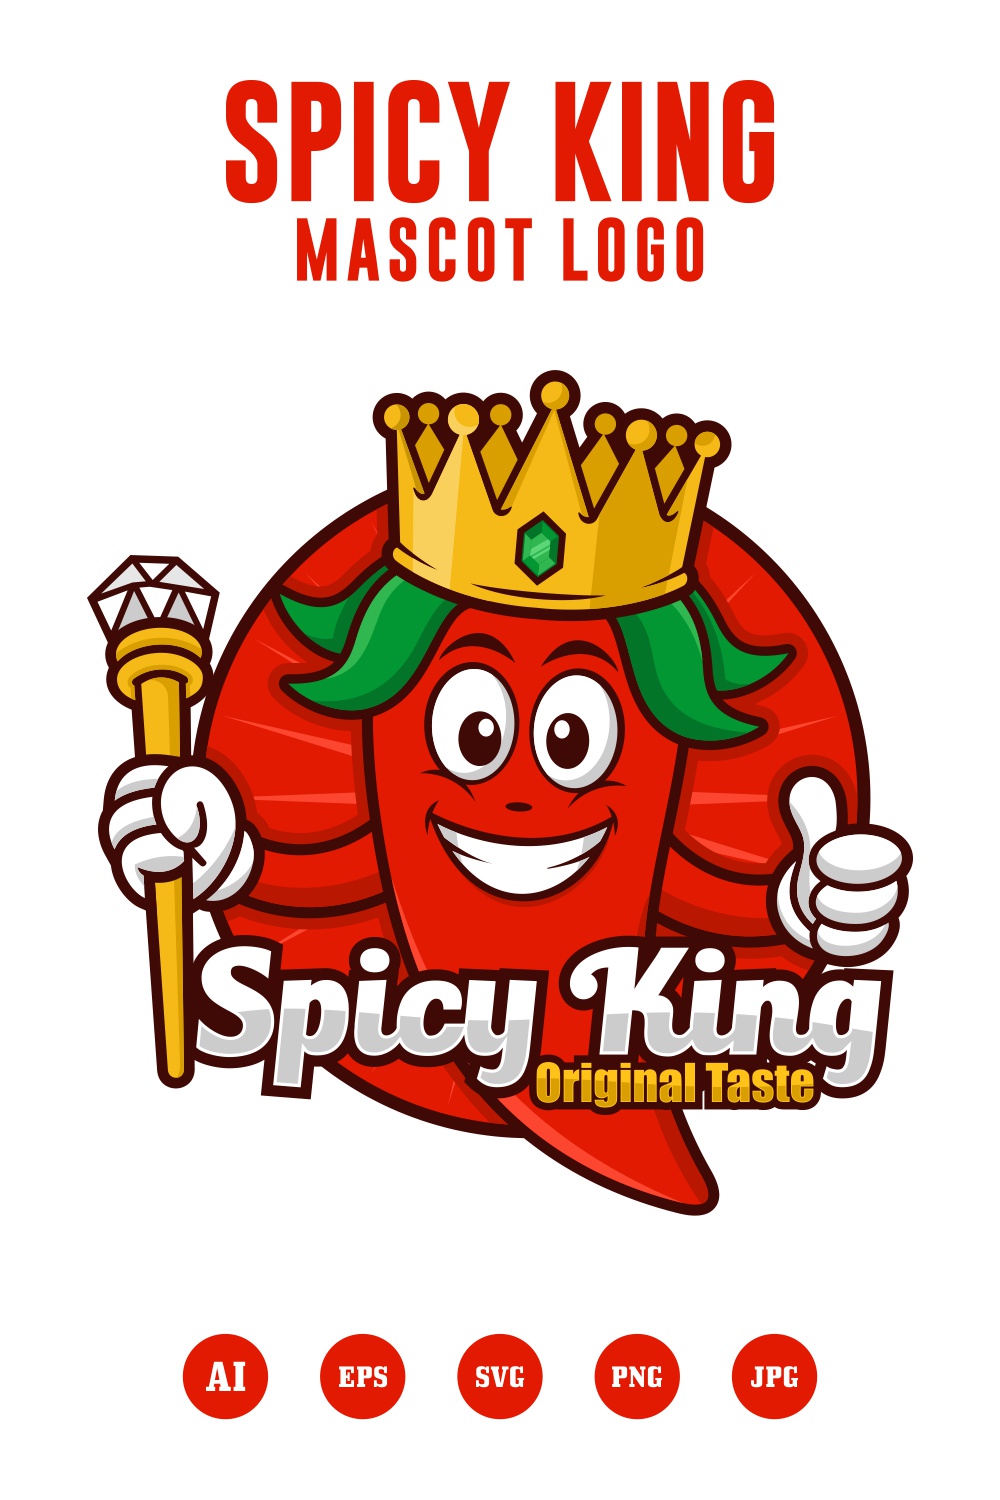 Spicy king logo design illustration - $6 pinterest preview image.